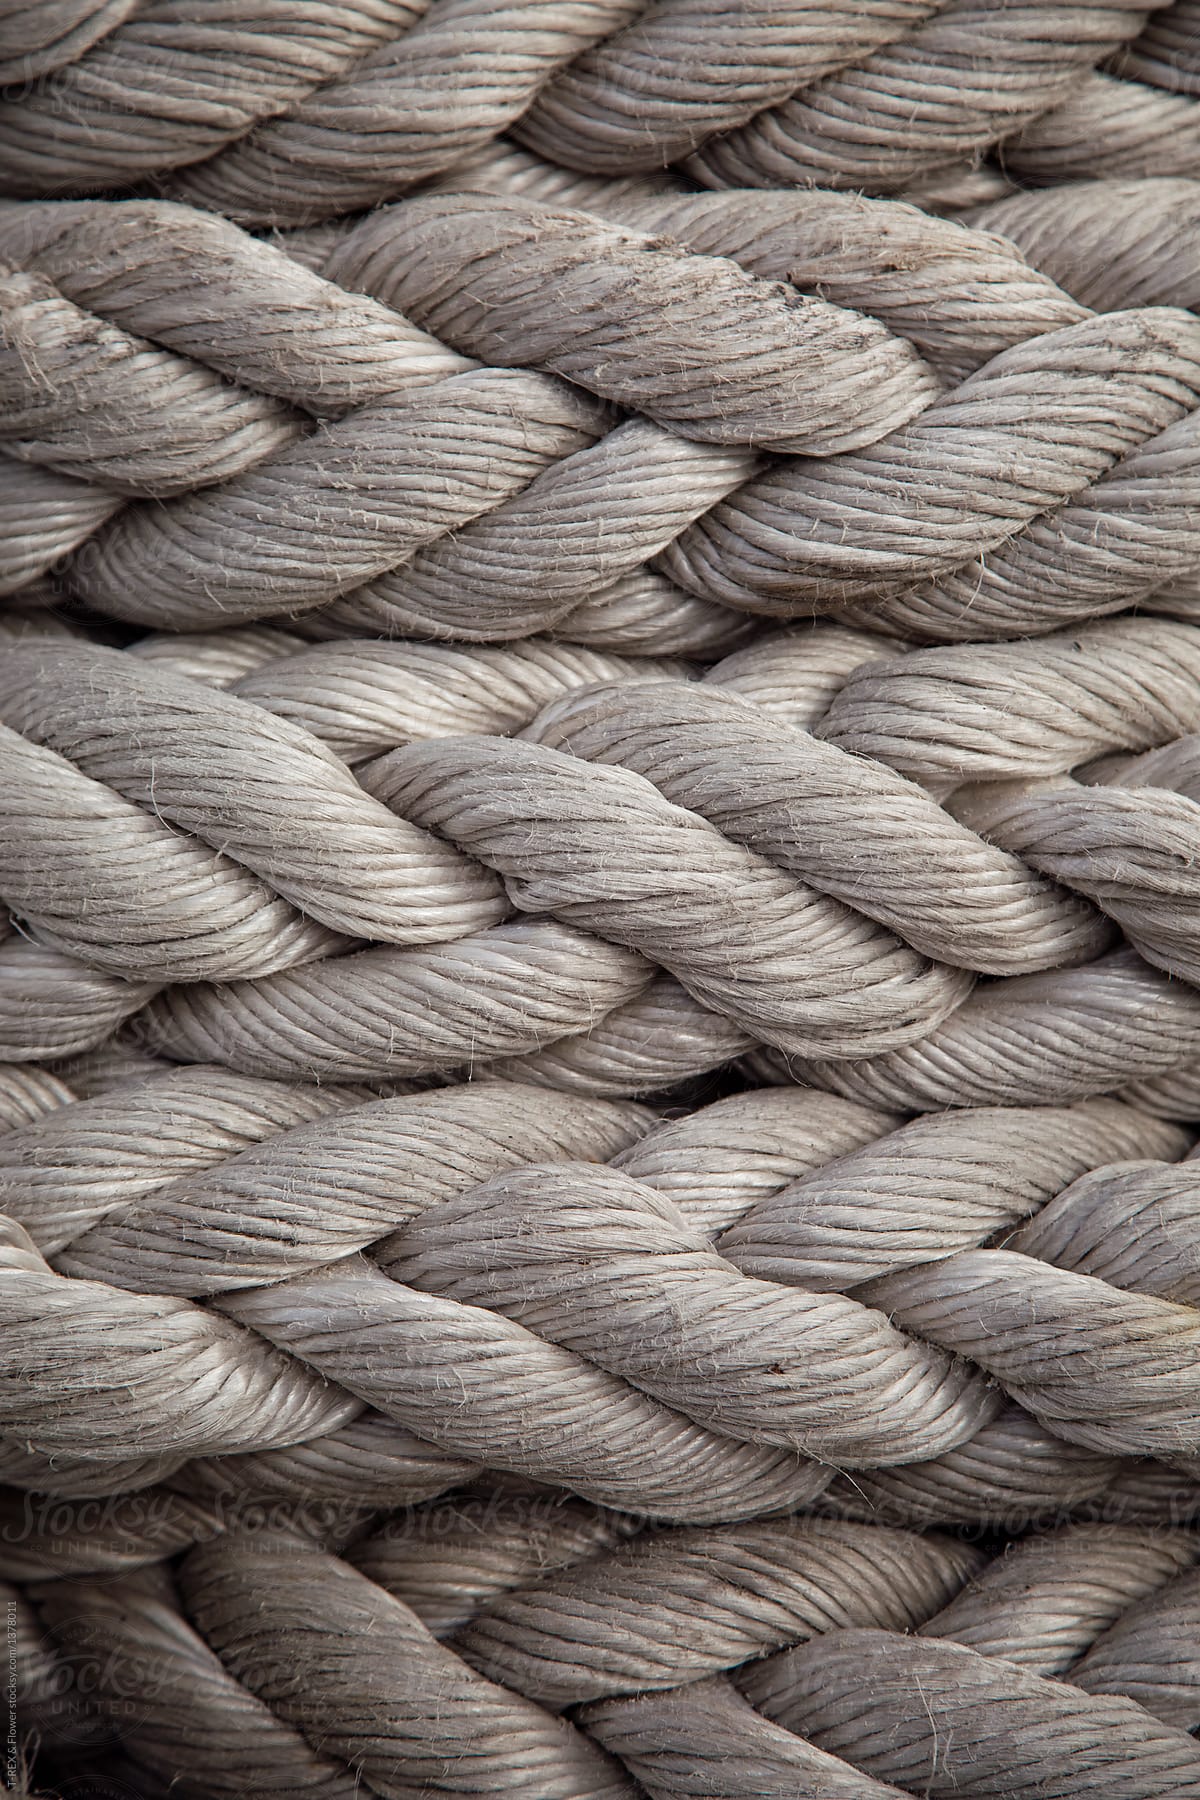 Mooring Rope Texture by Stocksy Contributor Danil Nevsky - Stocksy